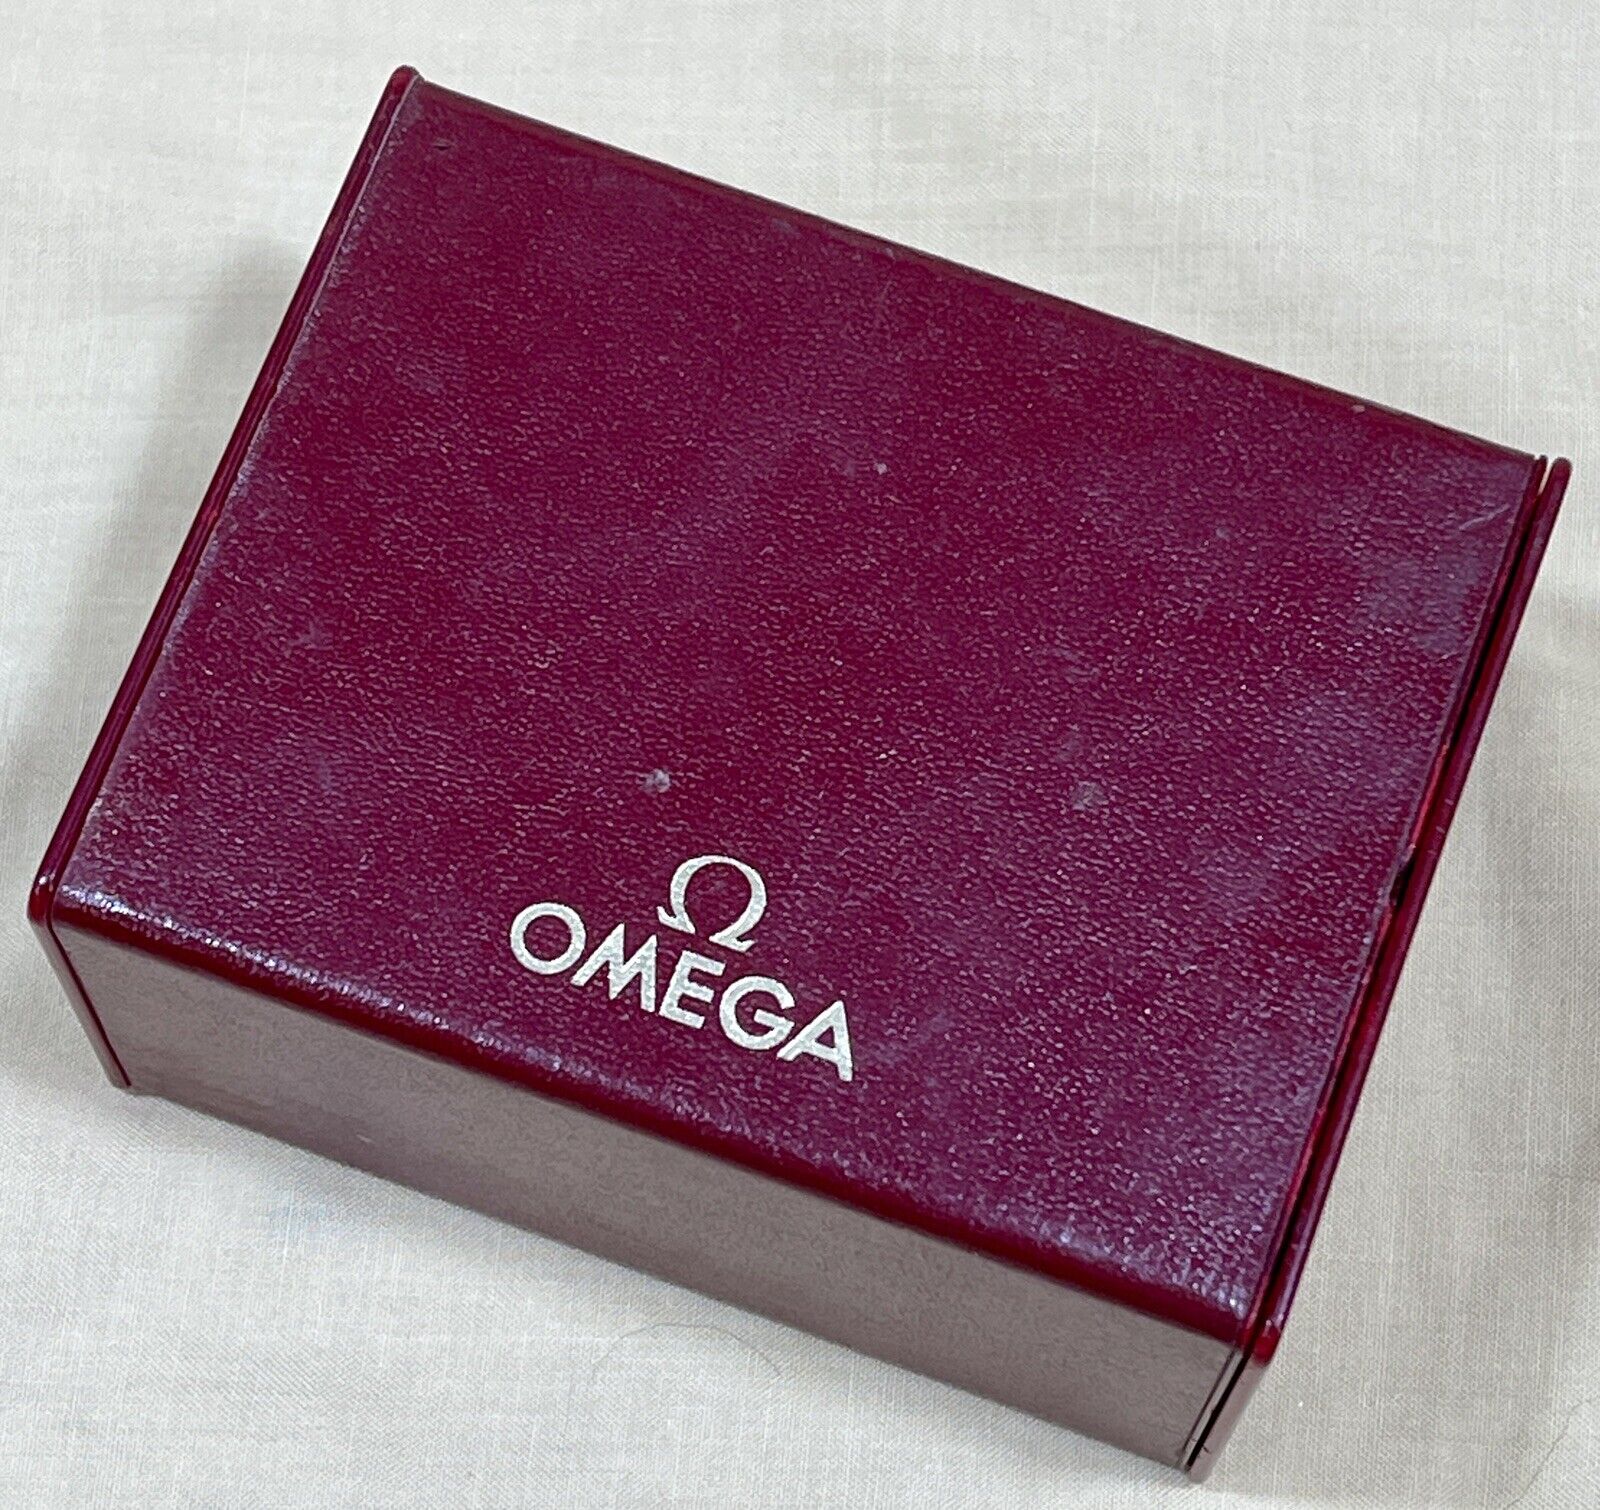 OMEGA Box Speedmaster Caliber 861 Chronograph Seamaster 300 1970’s Vintage OEM /